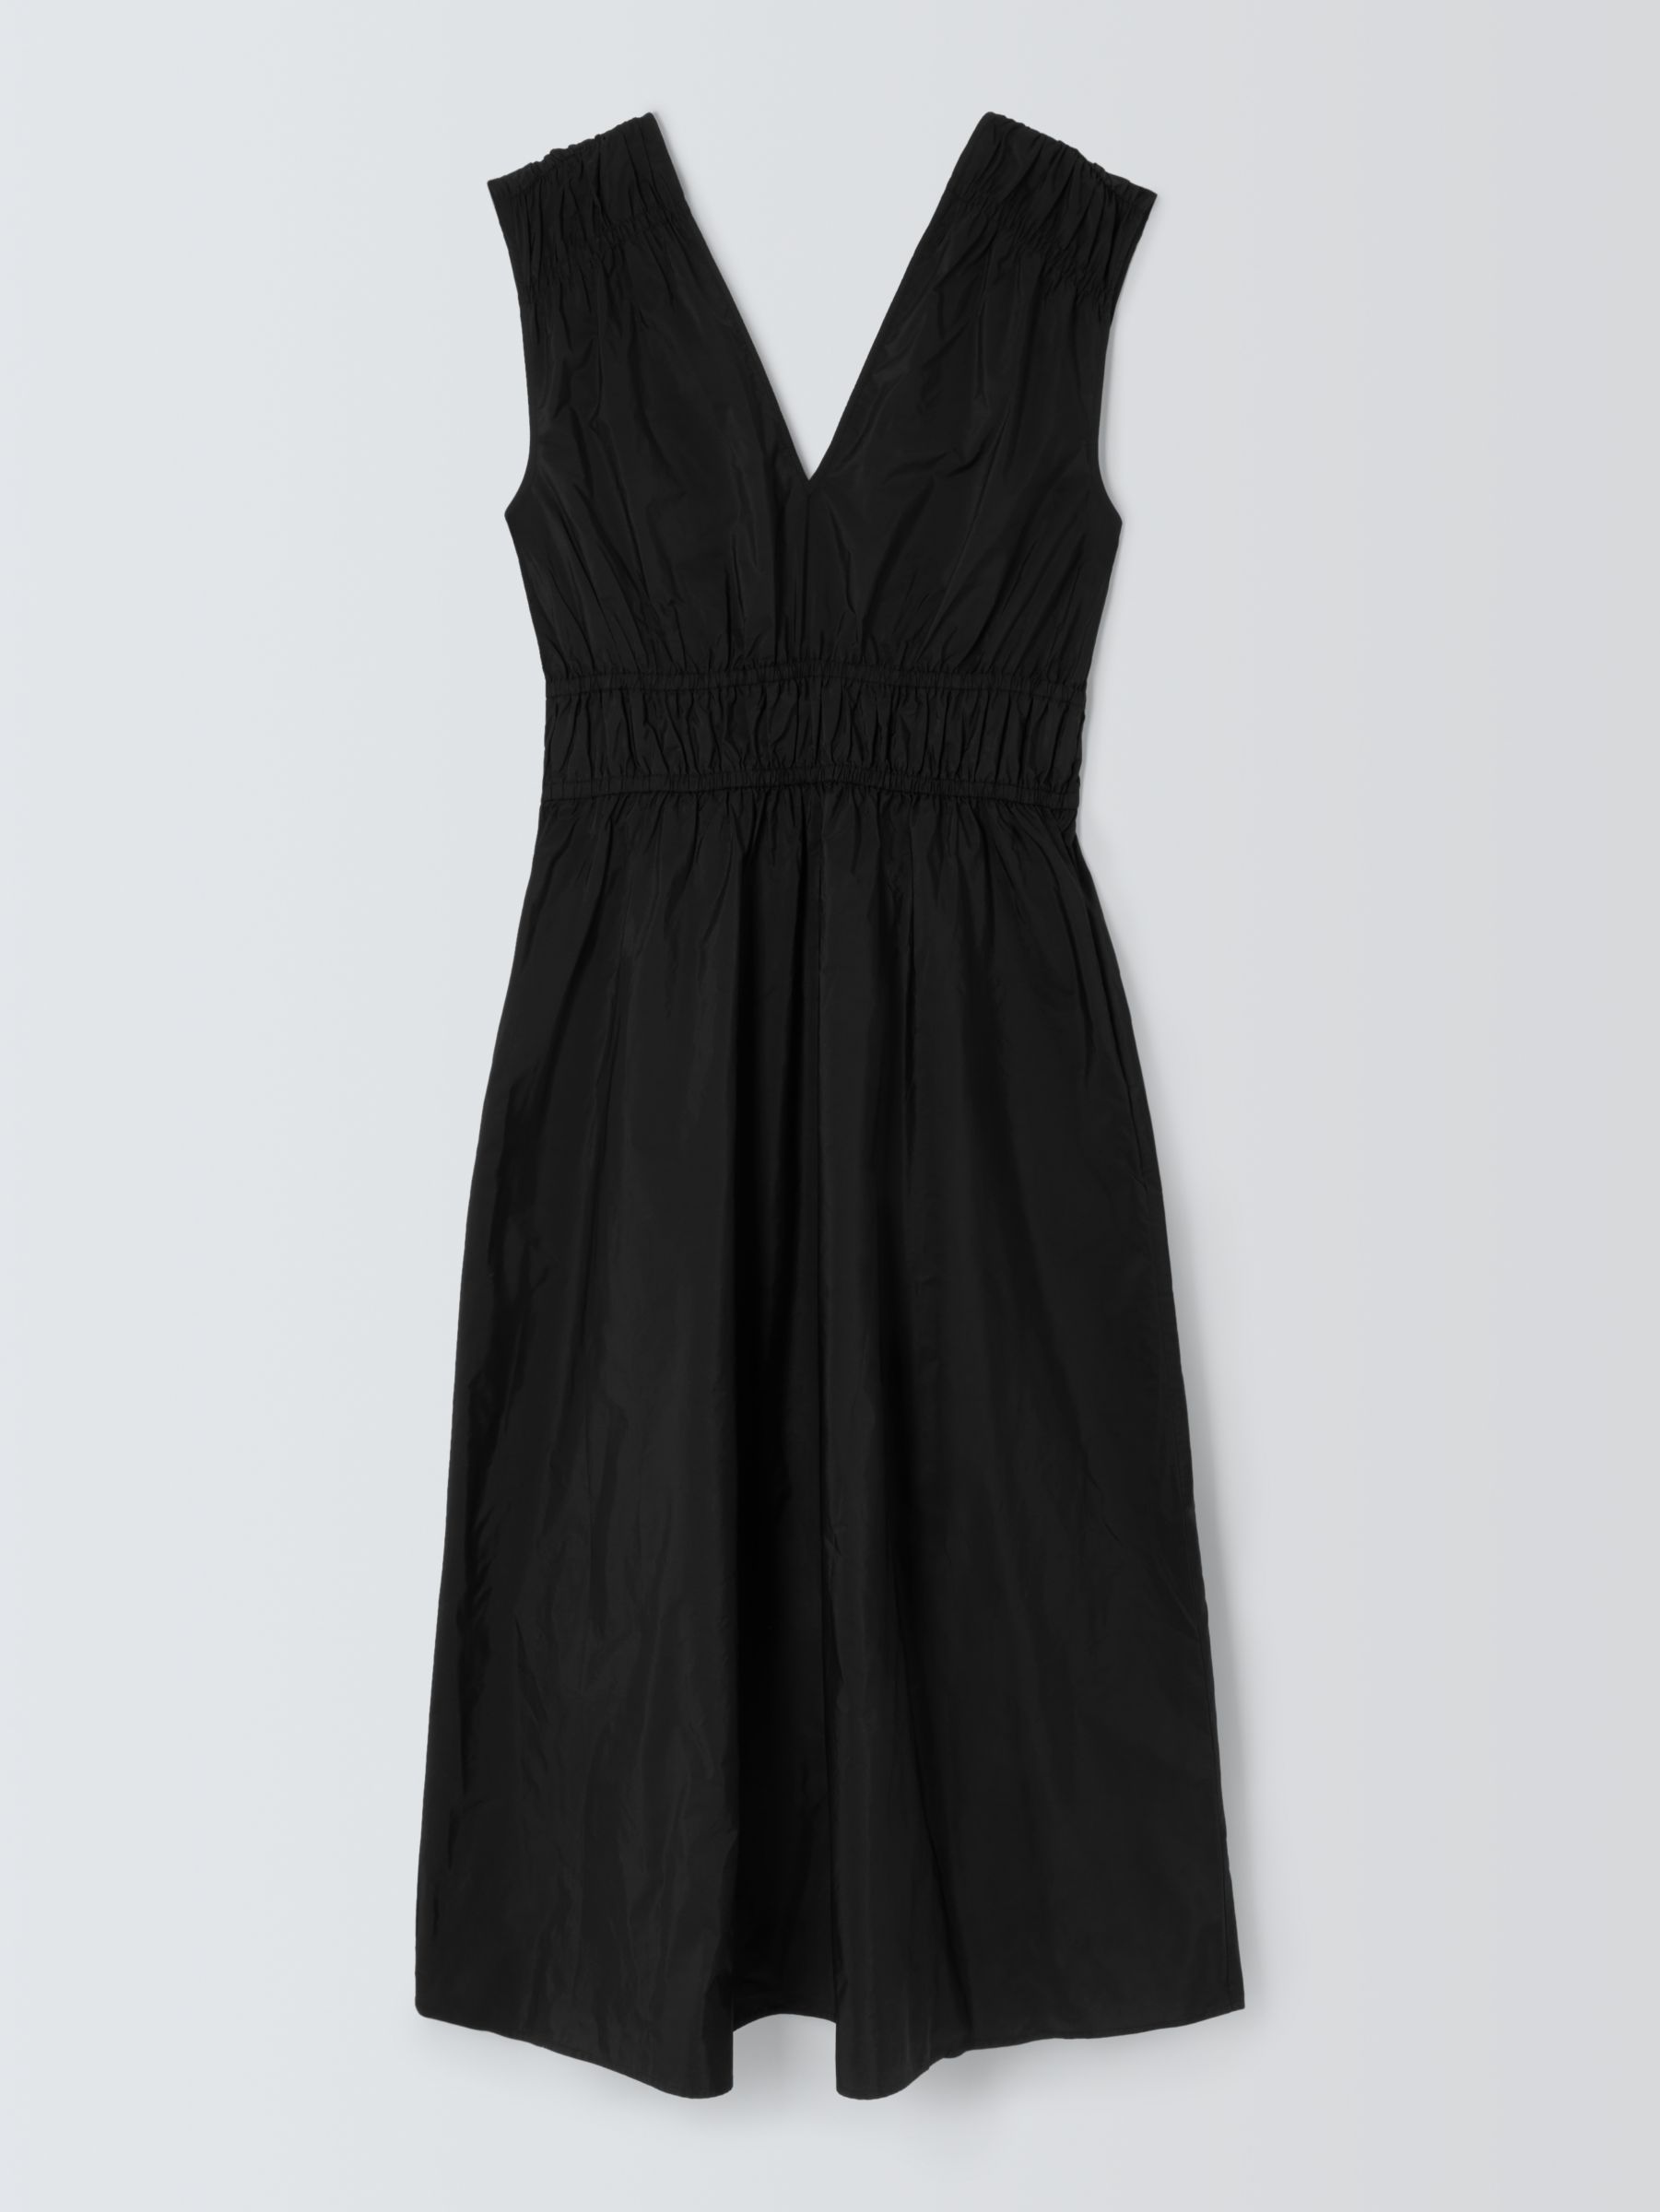 John Lewis Sleeveless Taffeta Dress, Black, 8